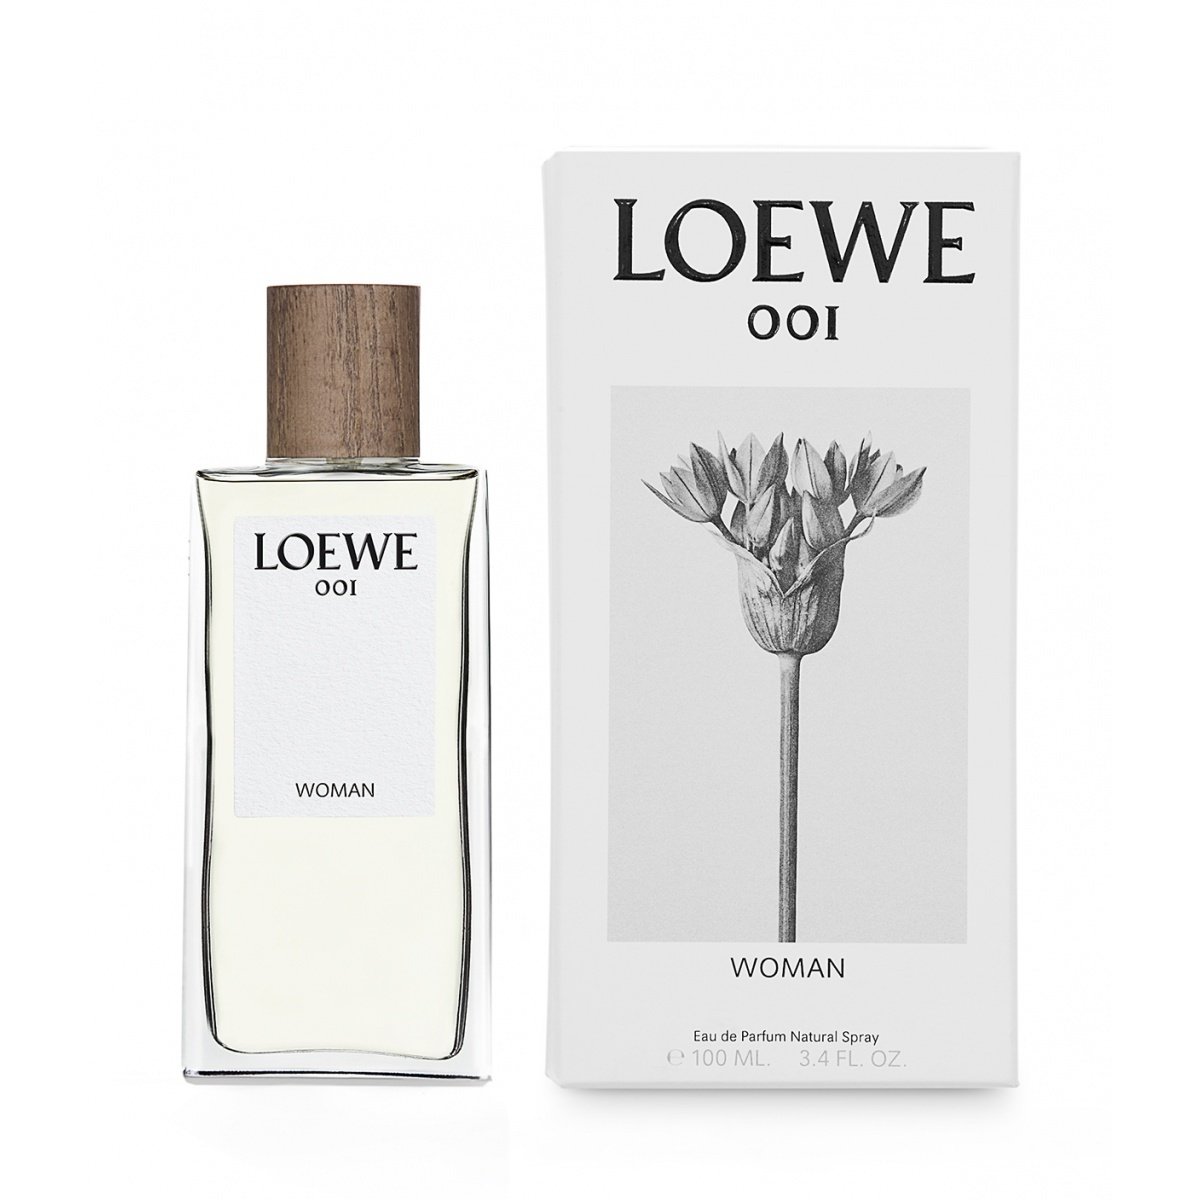 001 Woman by Loewe (Eau de Parfum) » Reviews & Perfume Facts